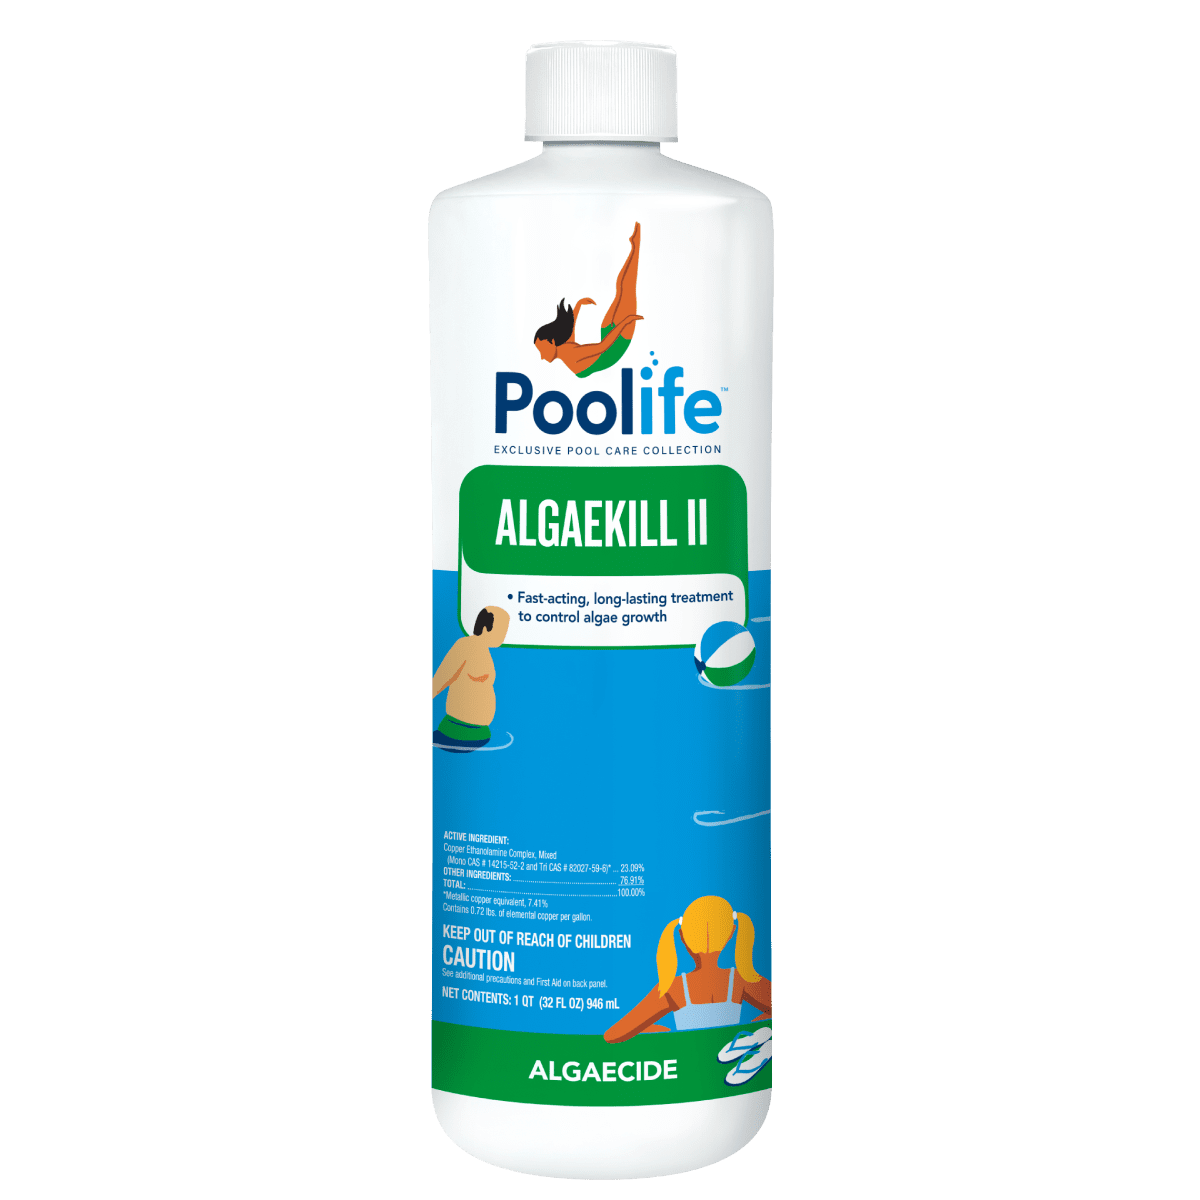 Poolife AlgaeKill II